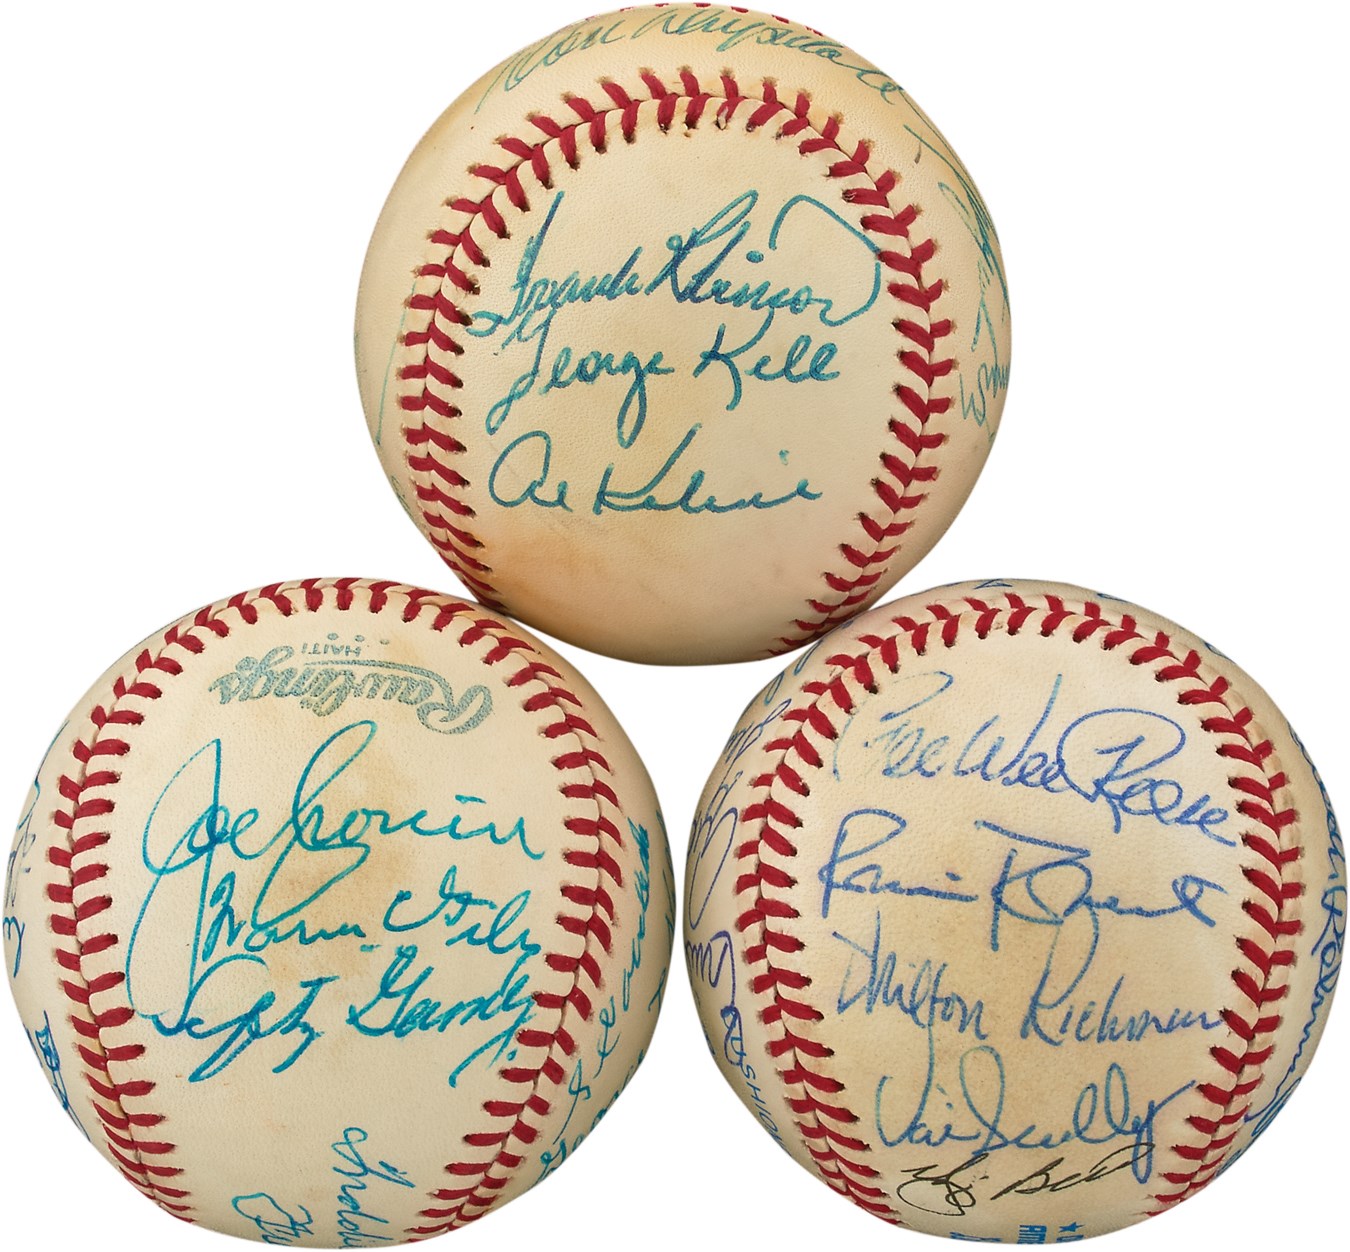 Three Hall of Famers Signed Baseballs